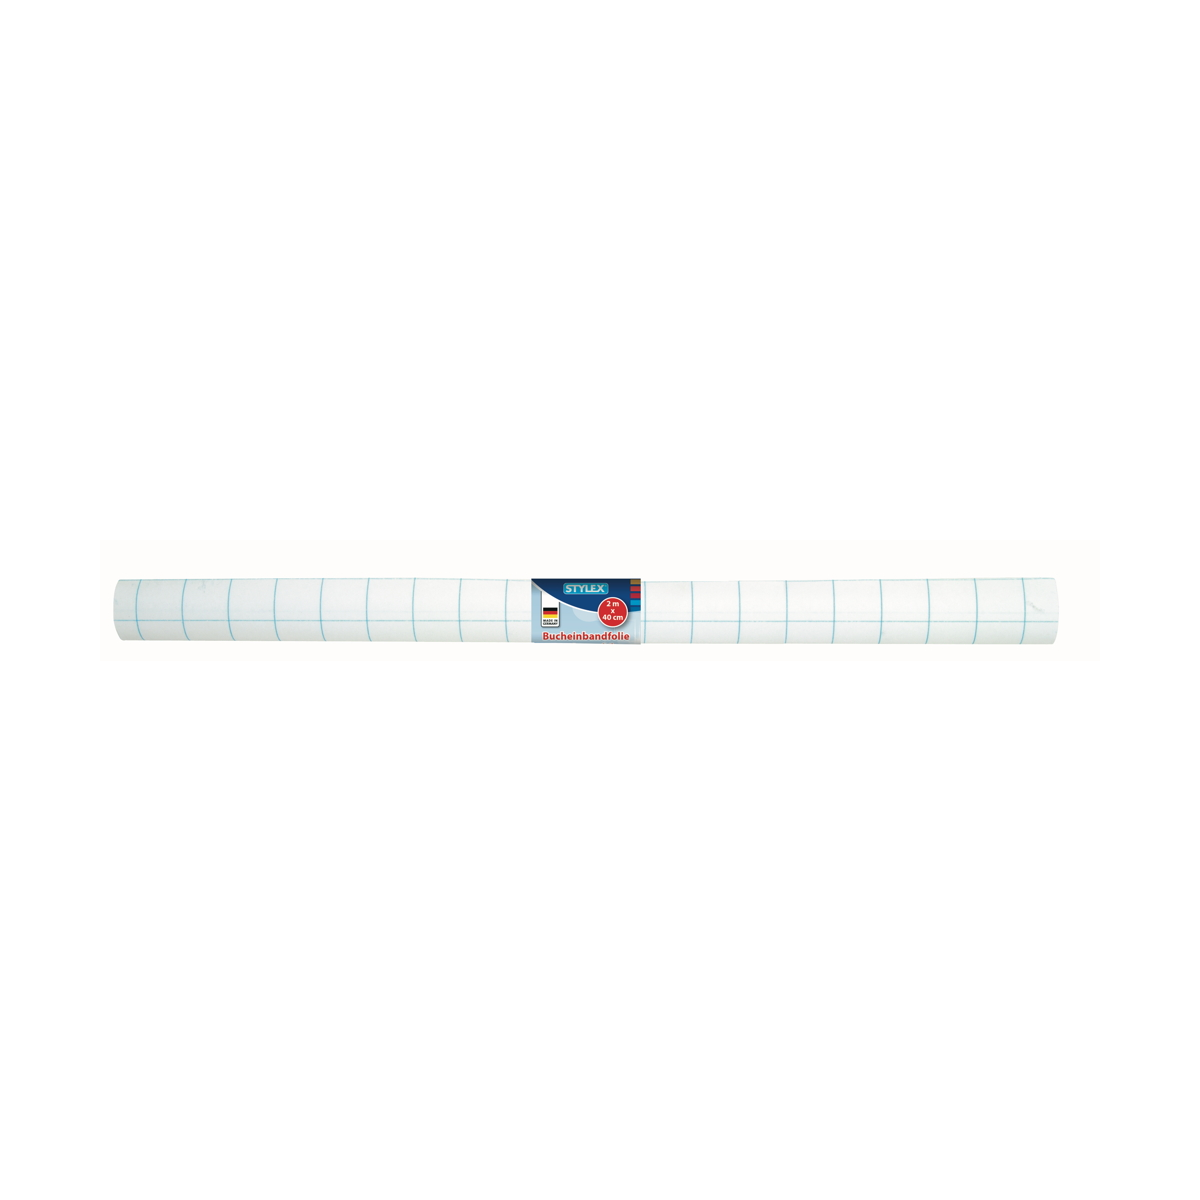 Stylex Bucheinband-Folie 2 m x 40 cm selbstklebend transparent - Tint, 2,50  €